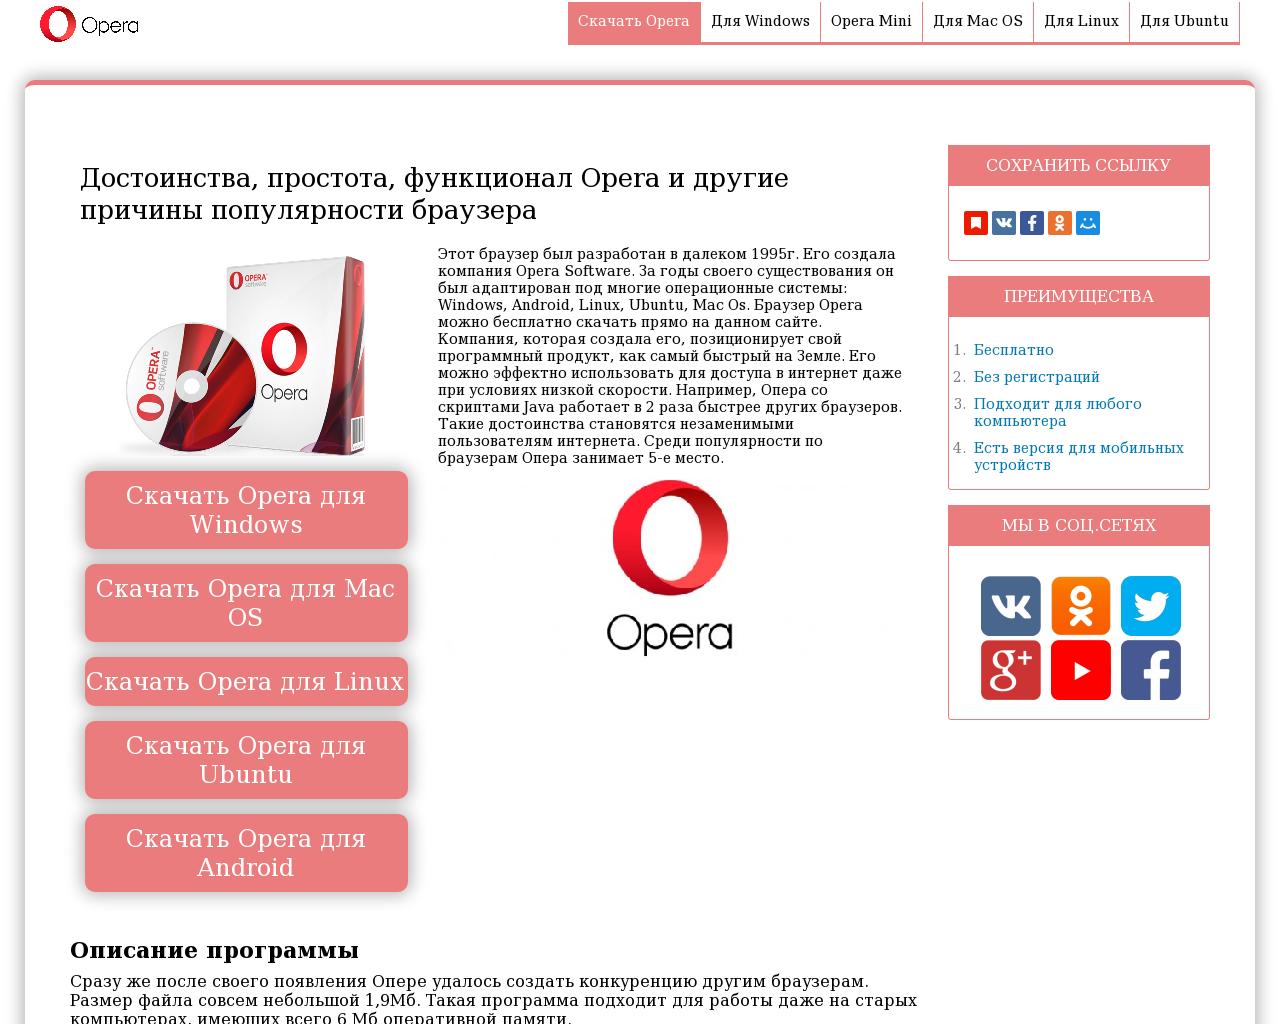 Изображение сайта opera-browser-ru.ru в разрешении 1280x1024